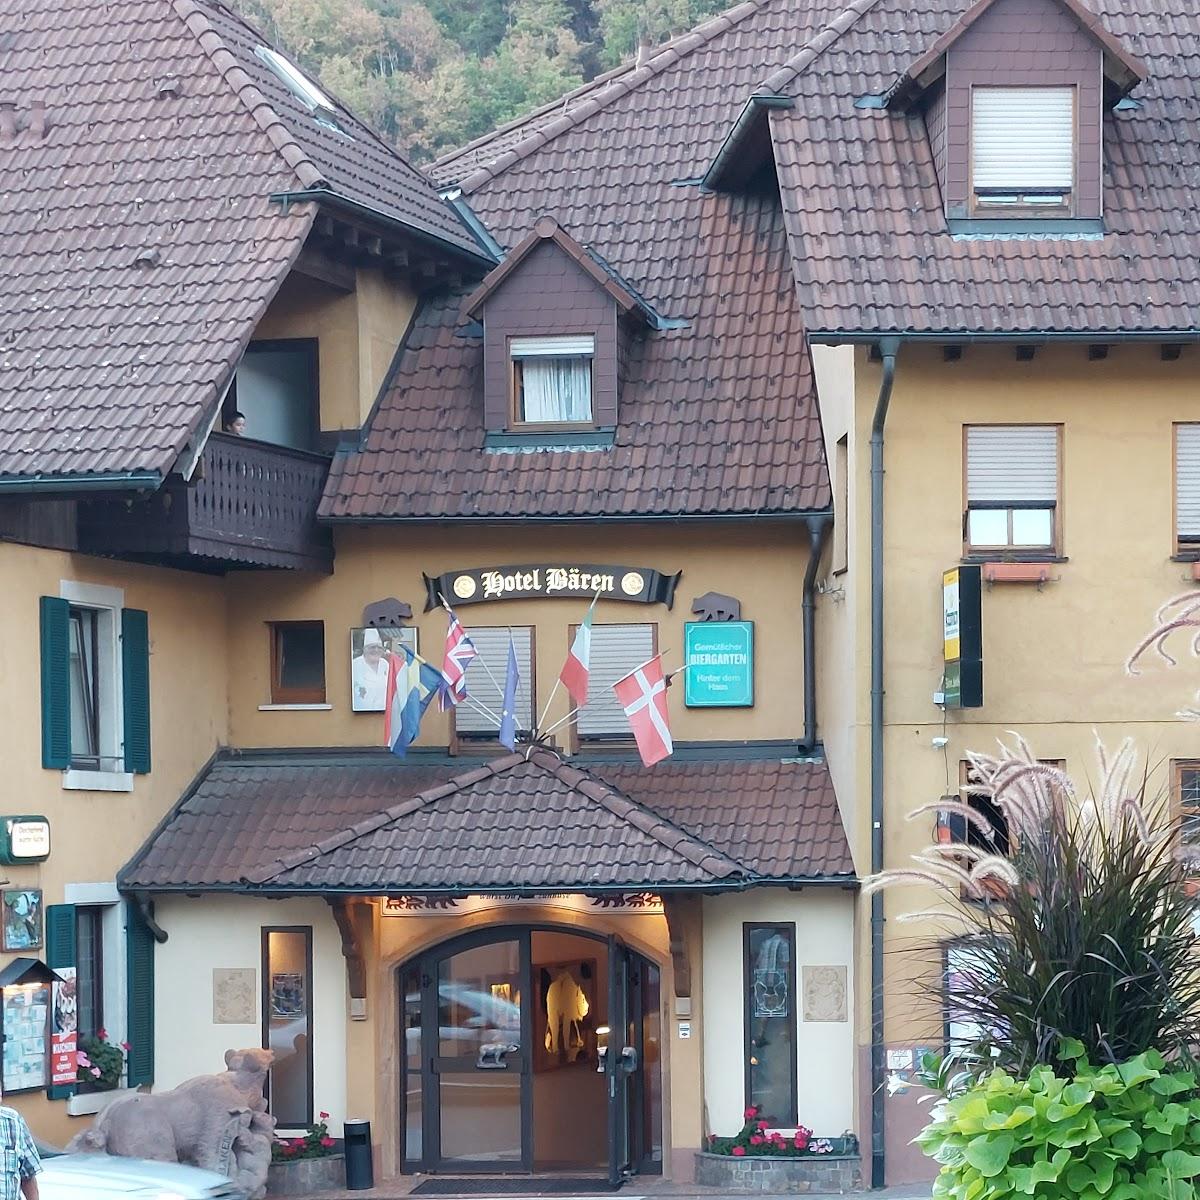 Restaurant "Bären" in Oberharmersbach